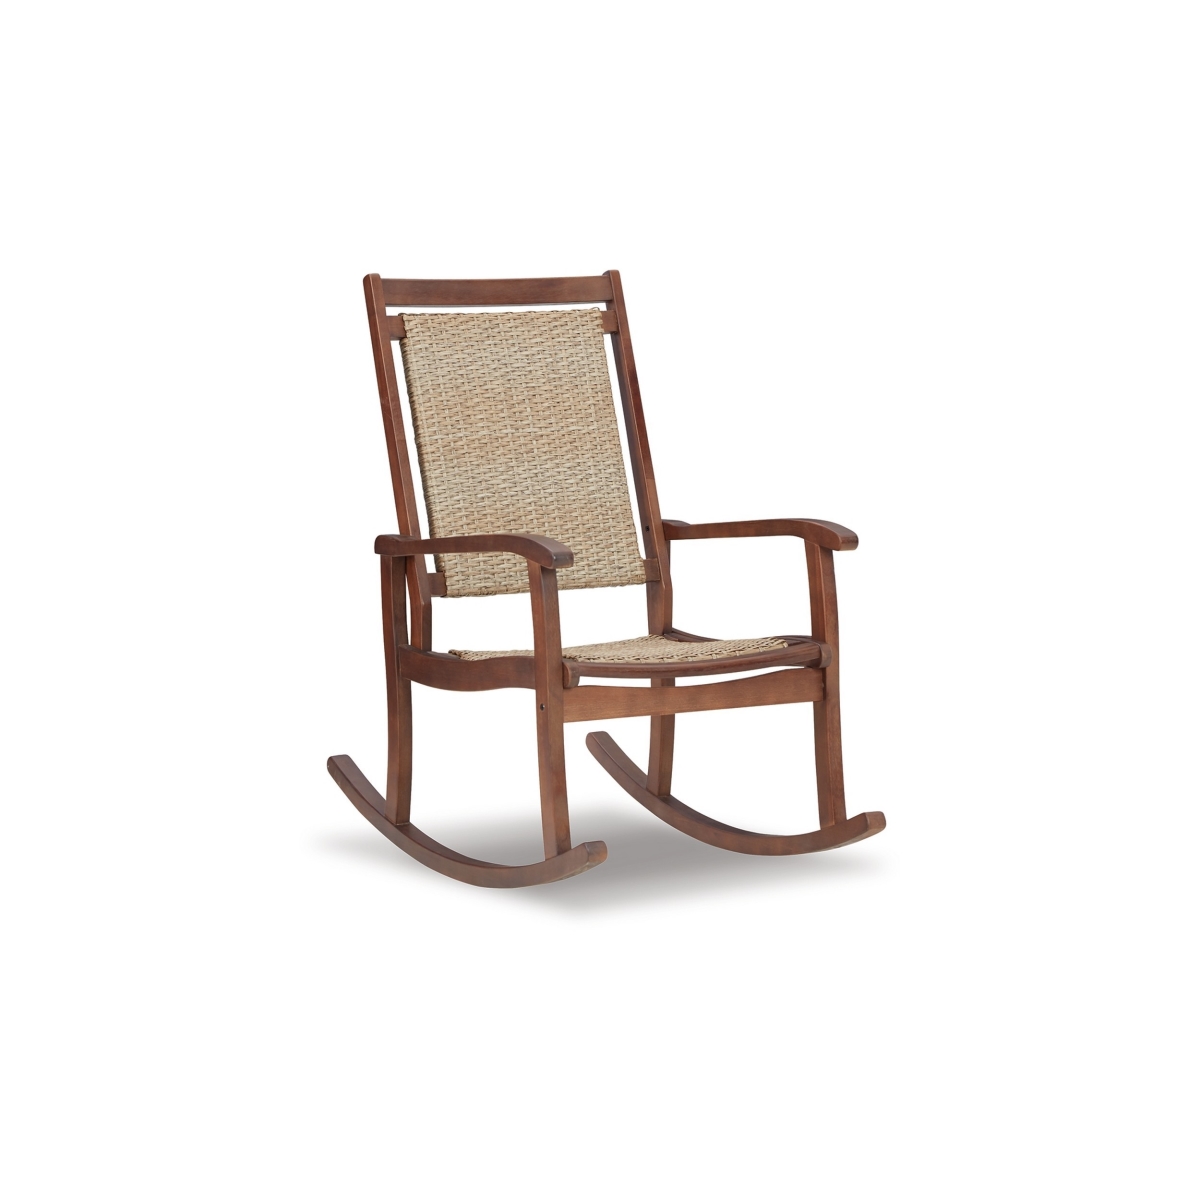 Benjara BM311596 40.5 x 38 x 24 in. Emin Rocking Chair with Outdoor Resin Wicker Seat&#44; Brown Wood Frame